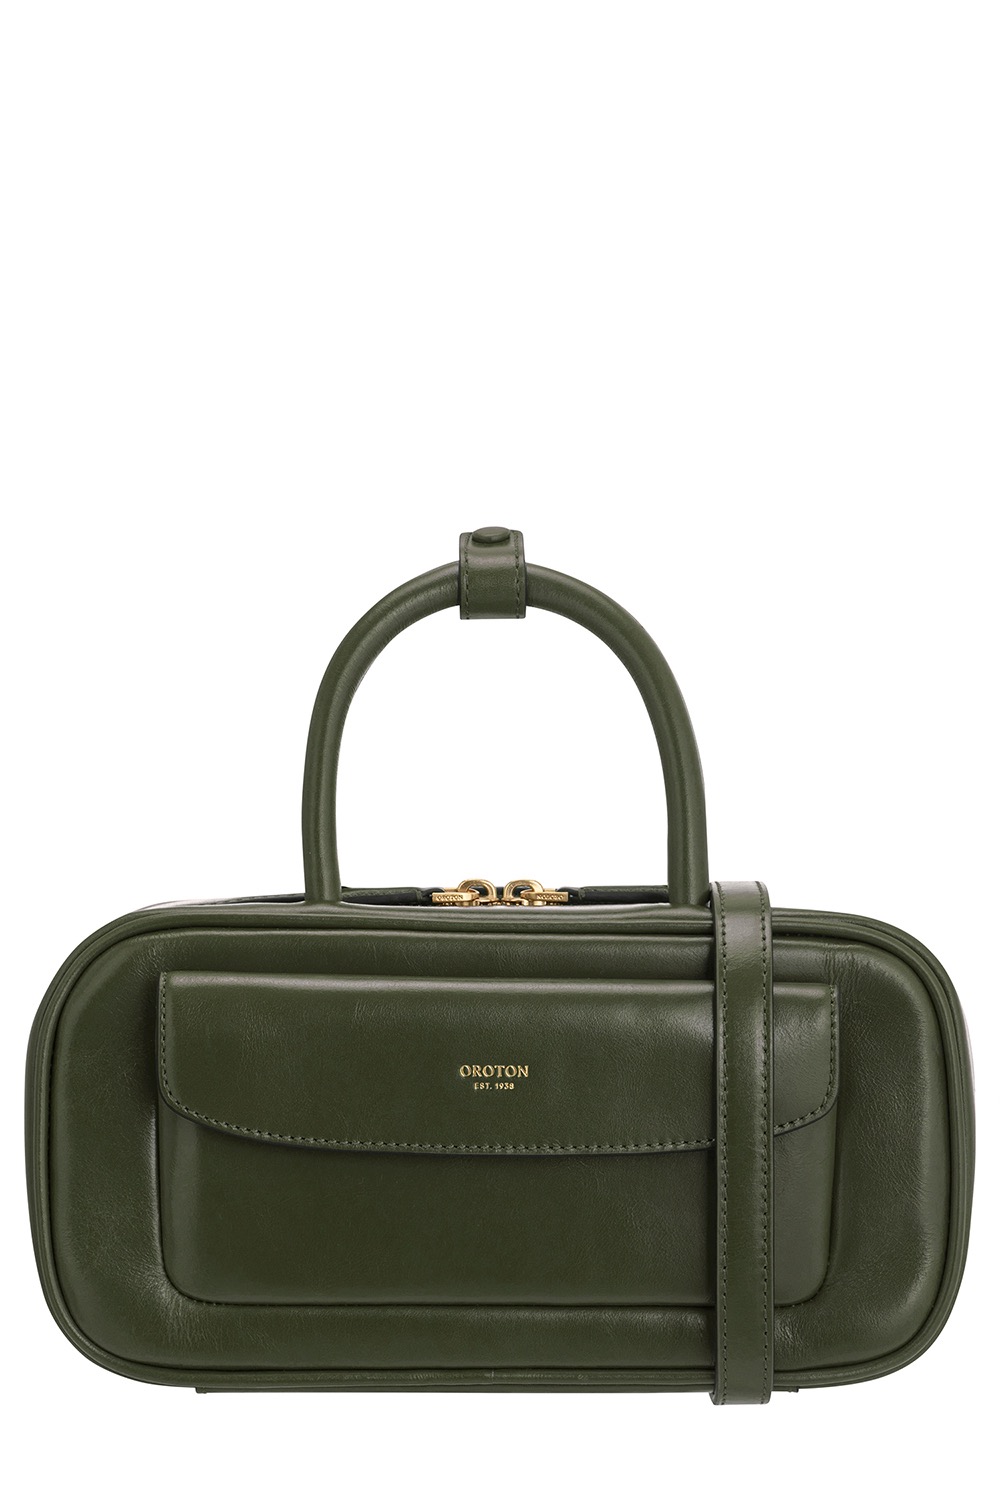 Bags | Designer Handbags, Crossbody, Shoulder, and Tote Bags | Oroton